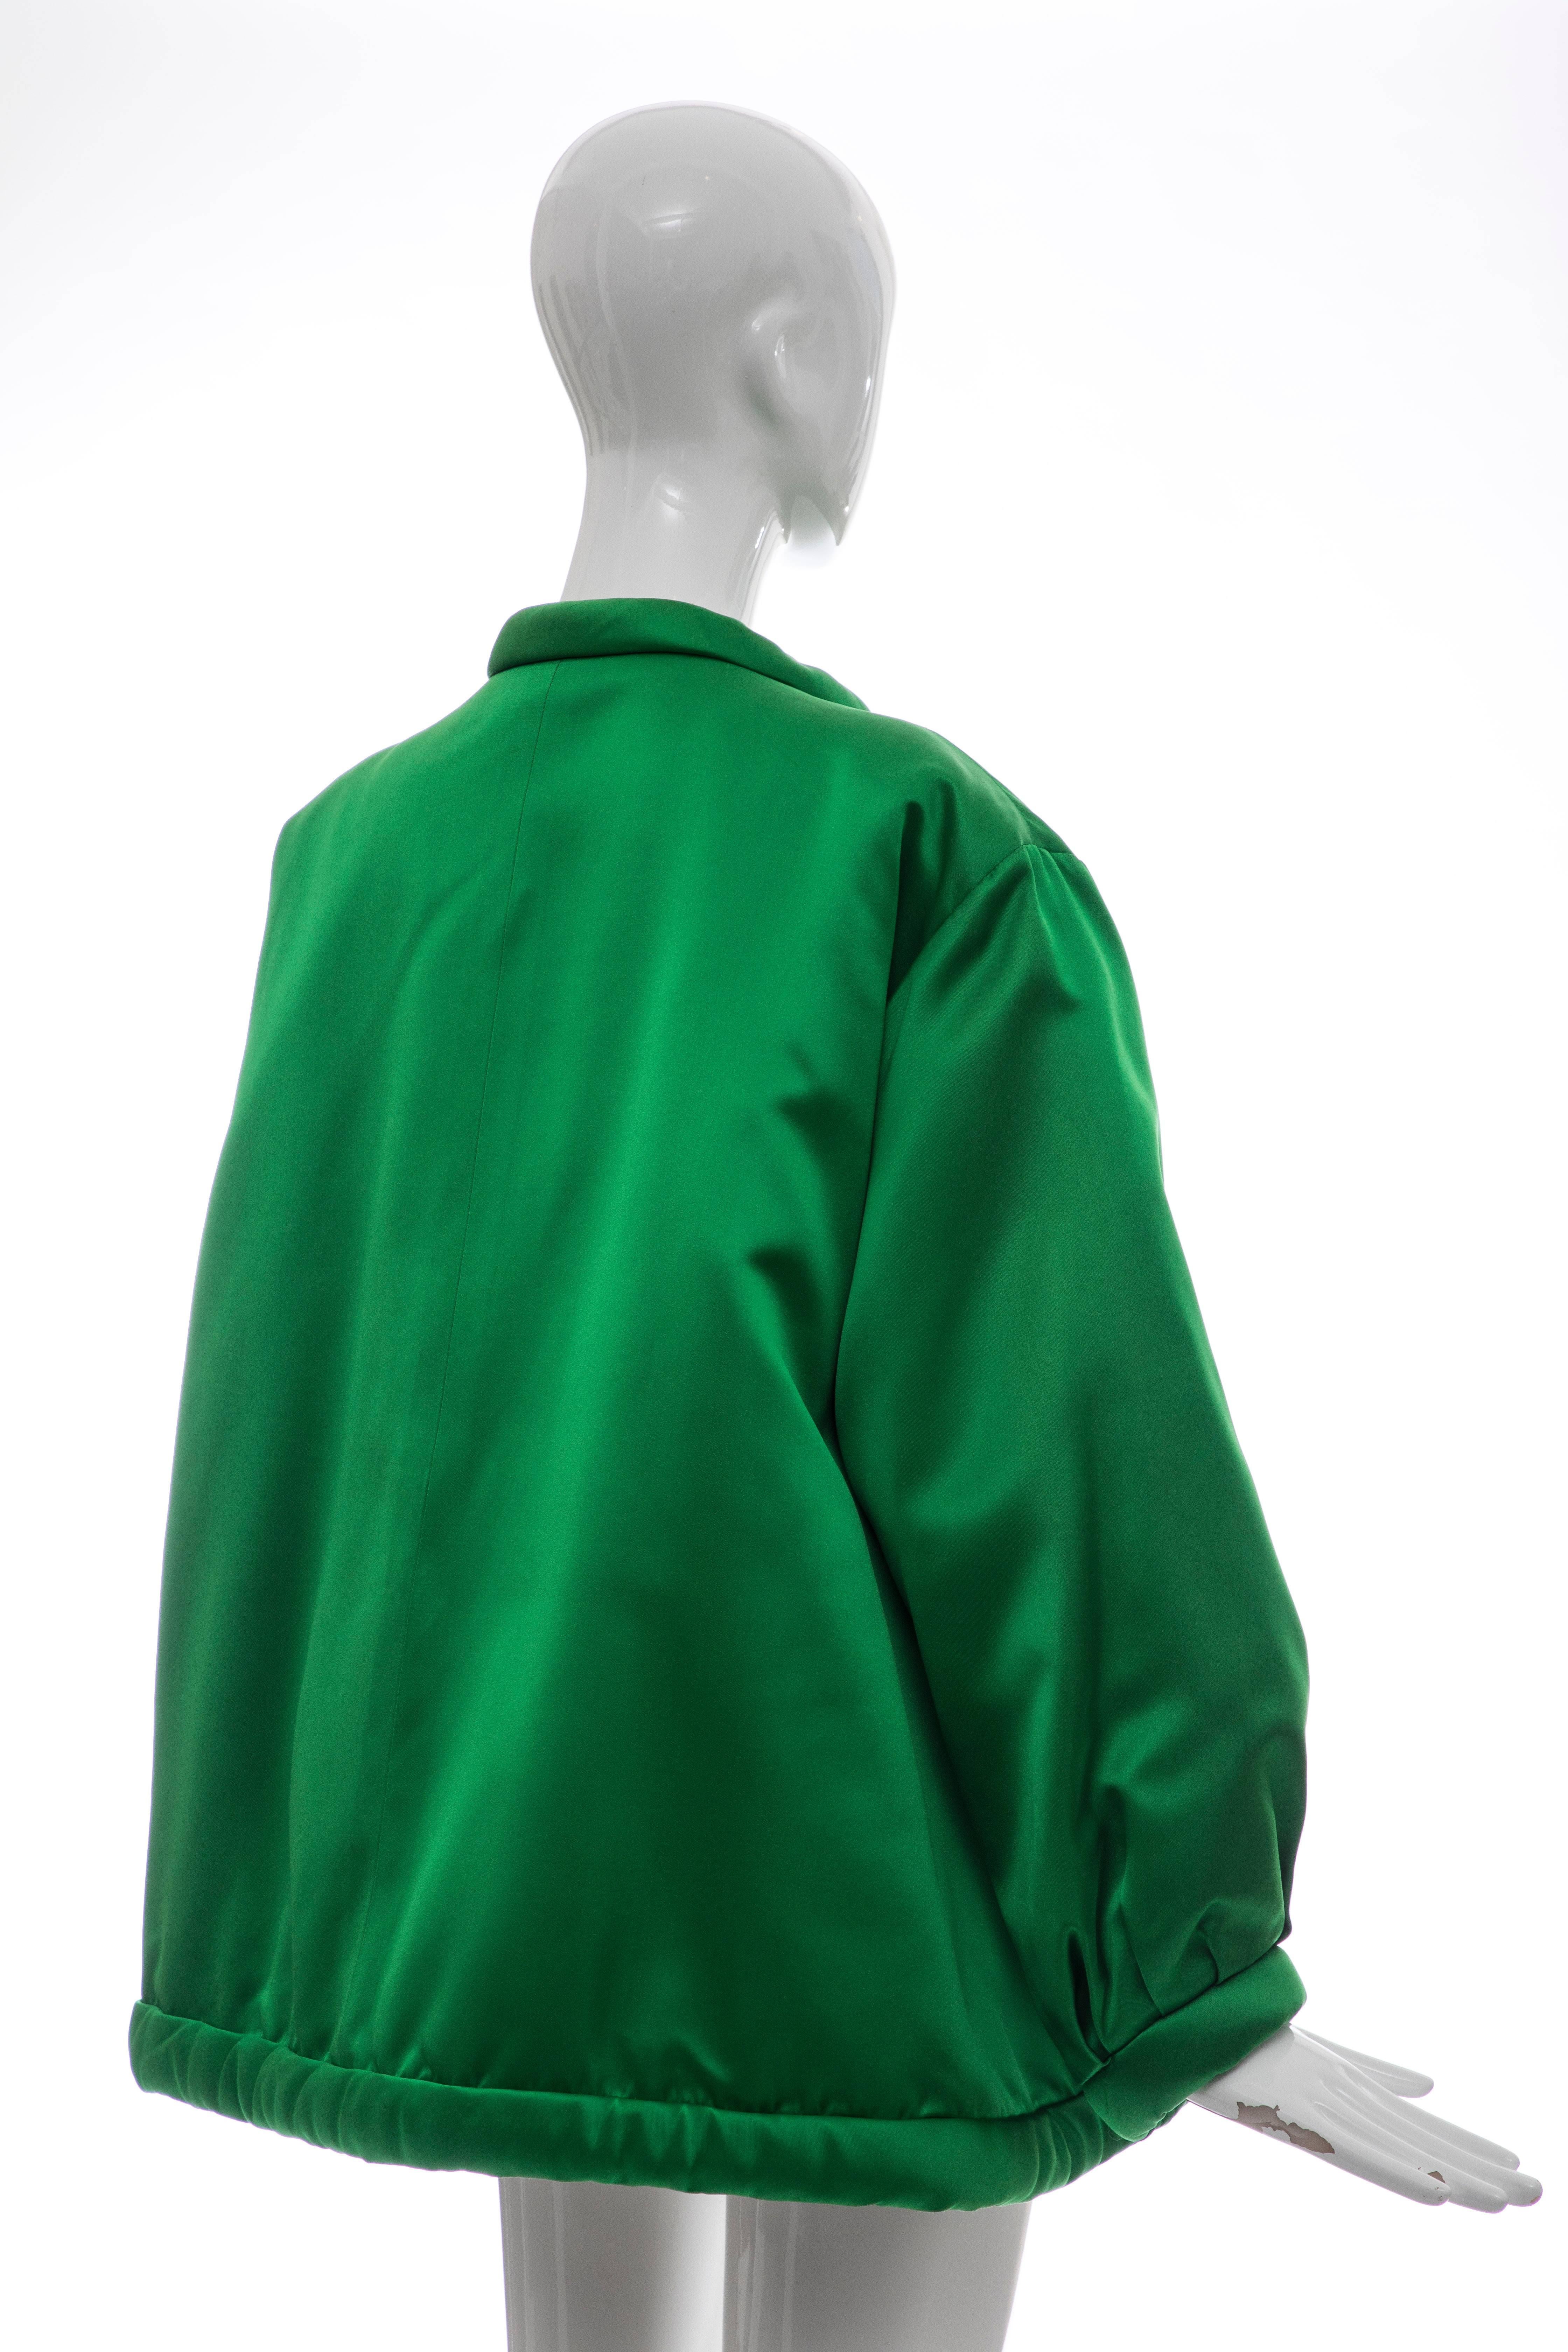 Yves Saint Laurent Rive Gauche Emerald Silk Satin Evening Jacket, Circa 1980's 1